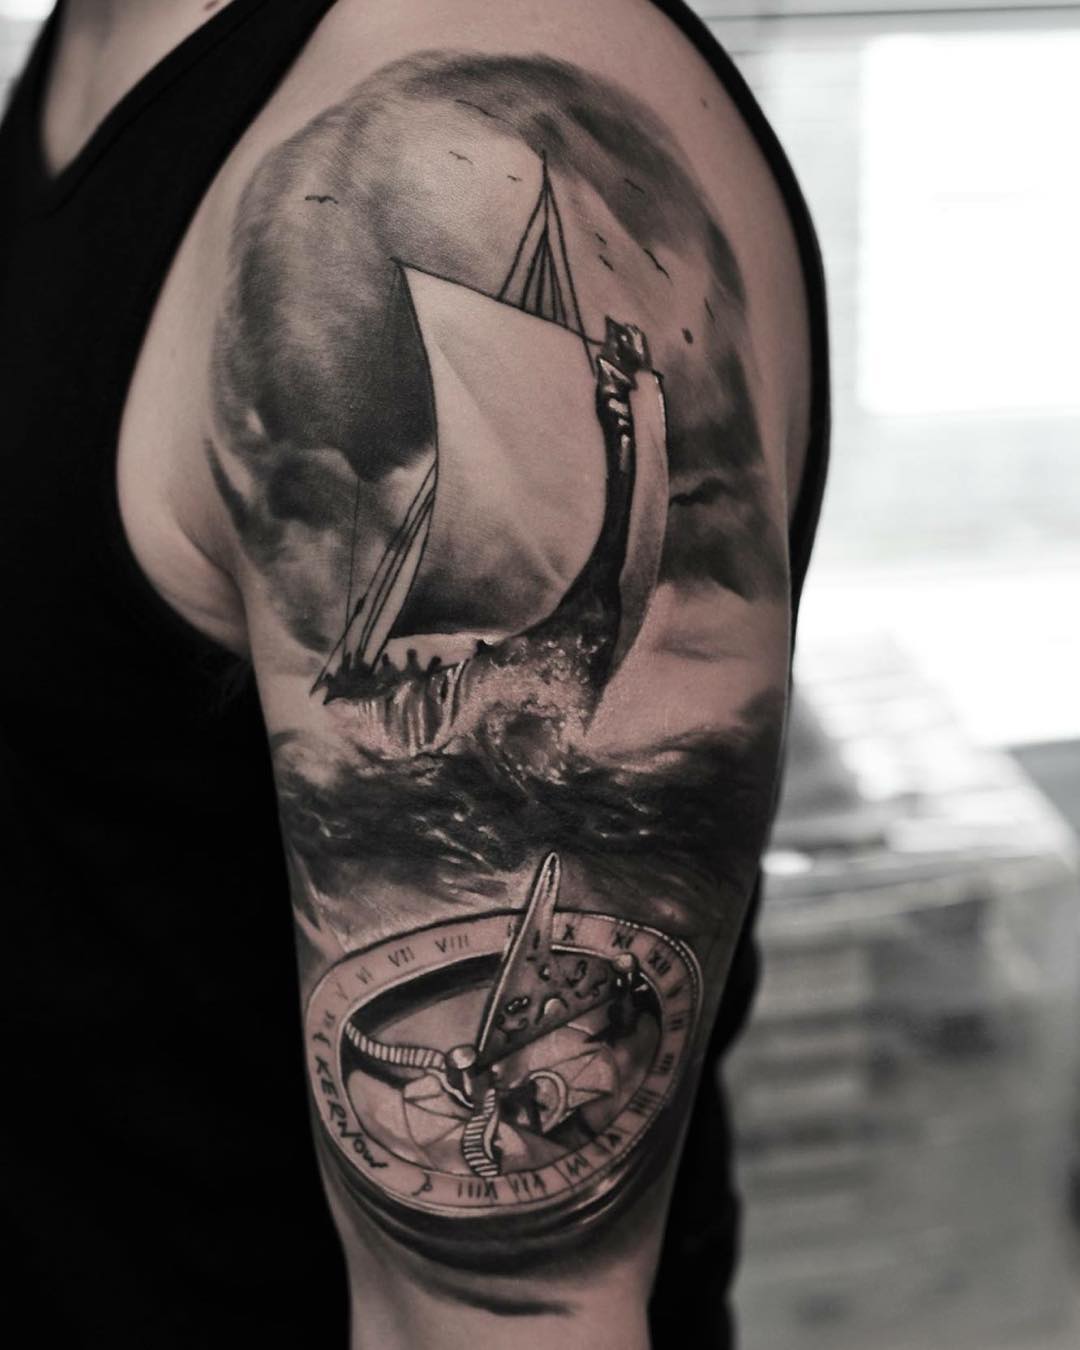 boat tattoo x 4 | im on a boat tattoo my and 3 friends got d… | Flickr